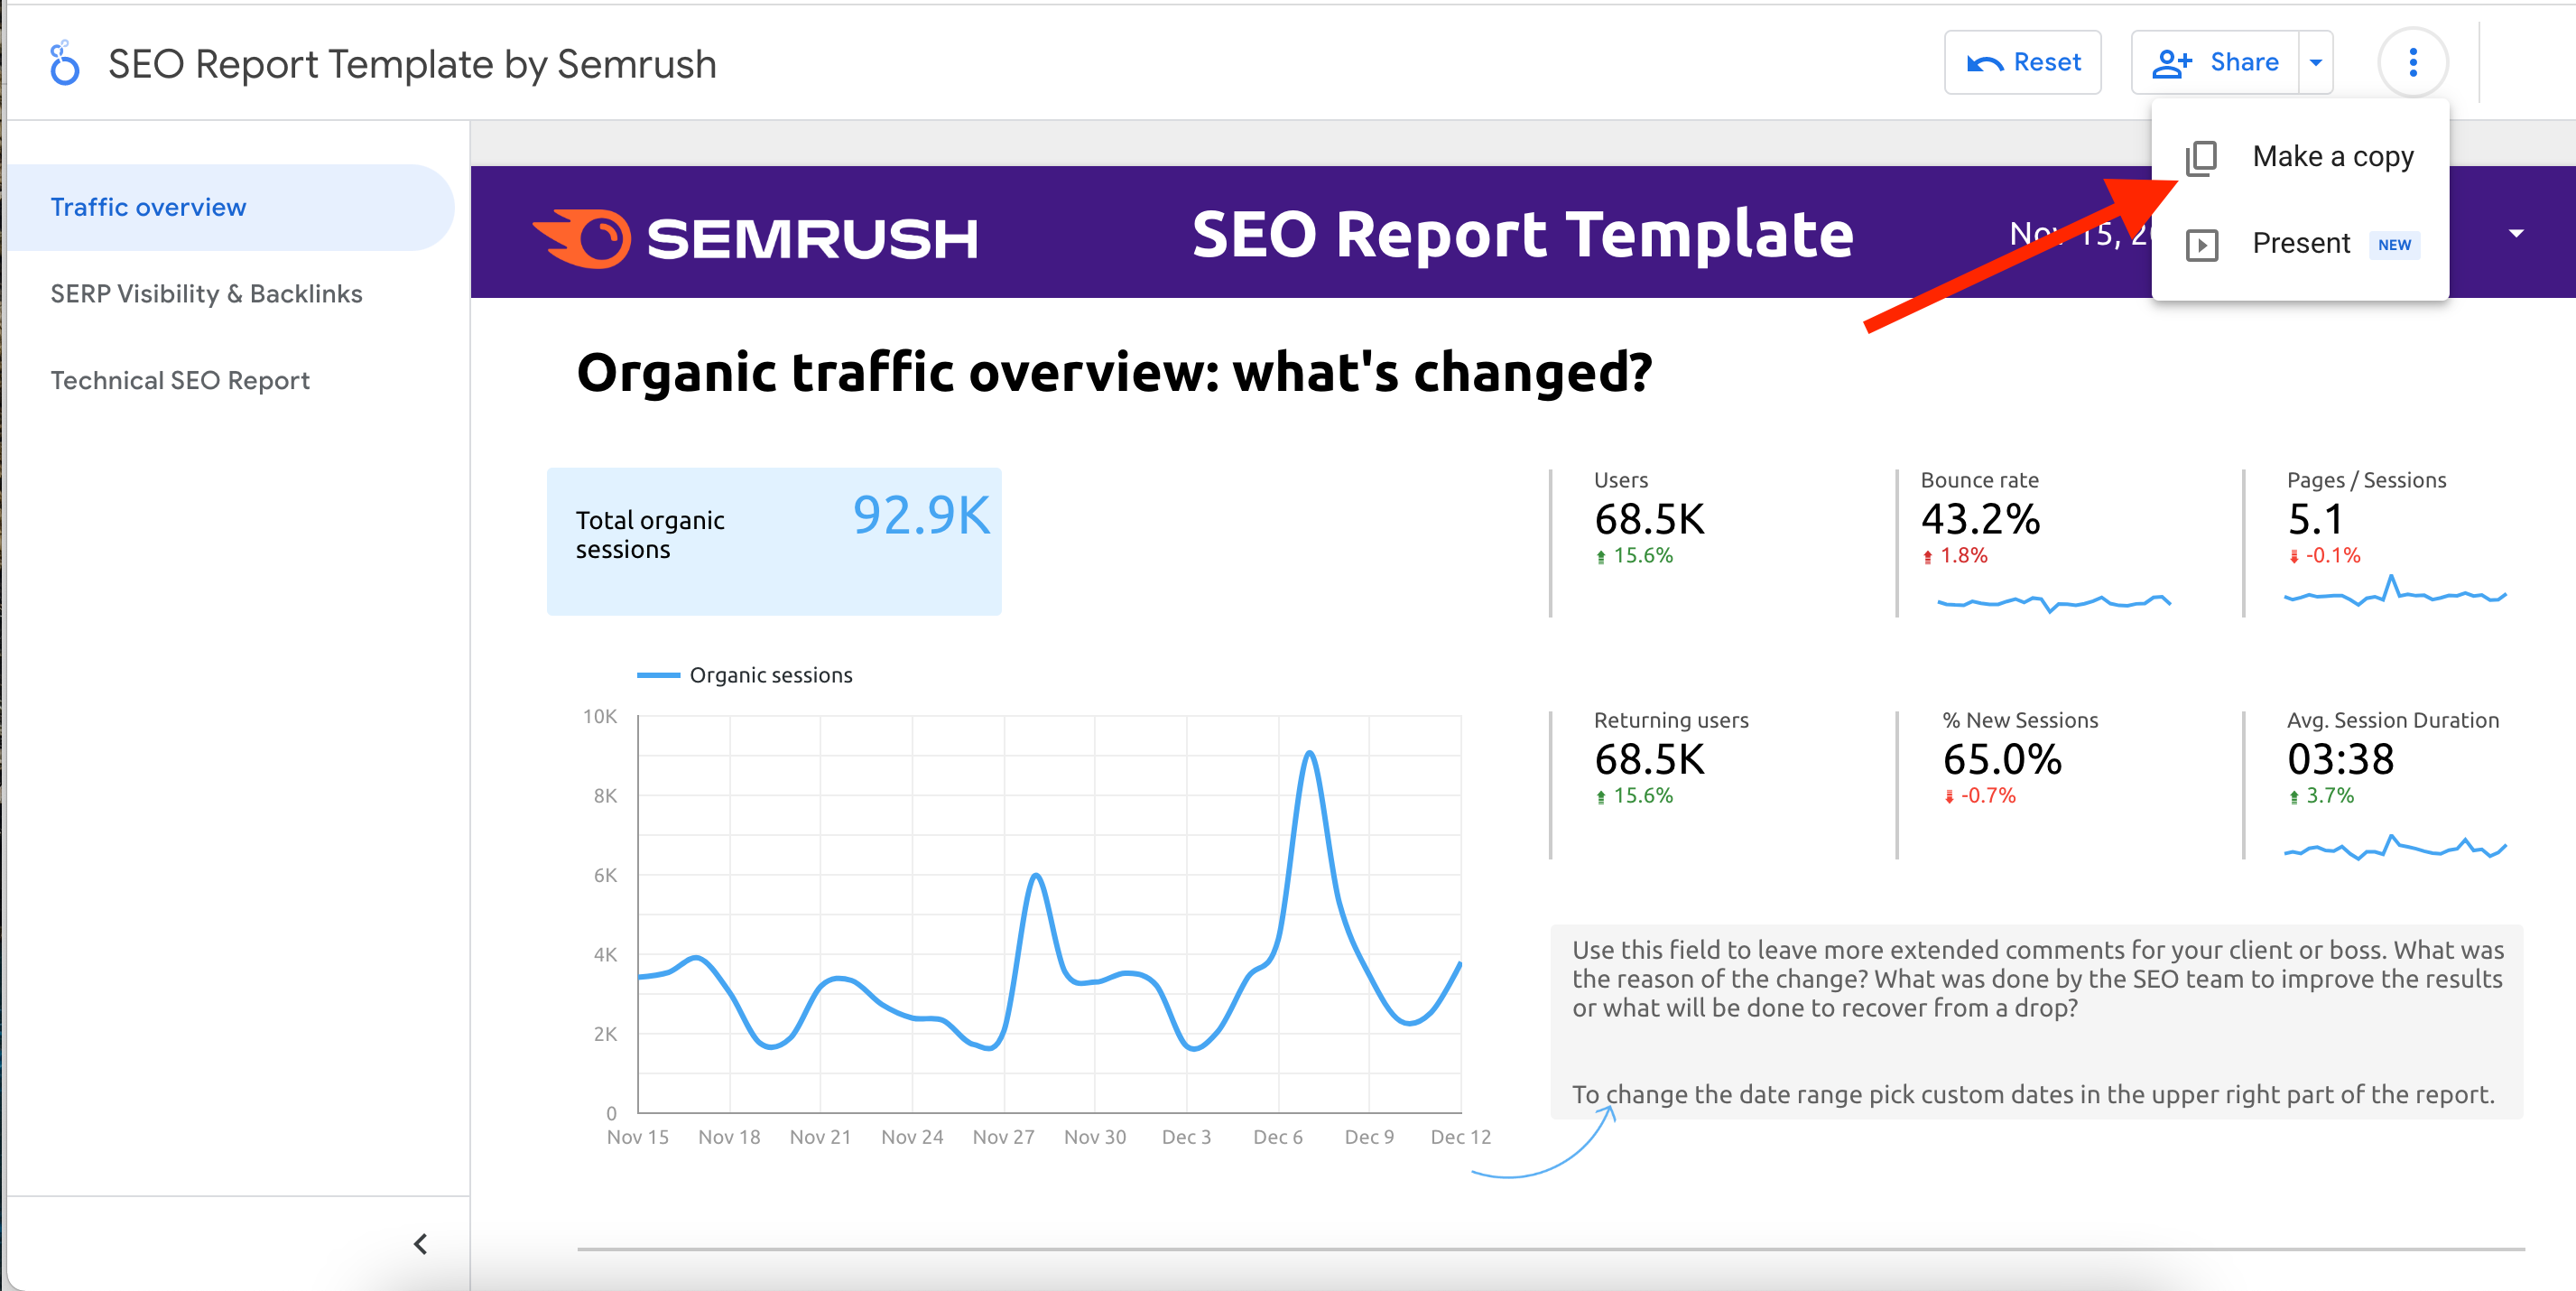 Google Data Studio Template A Complete SEO Report by Semrush